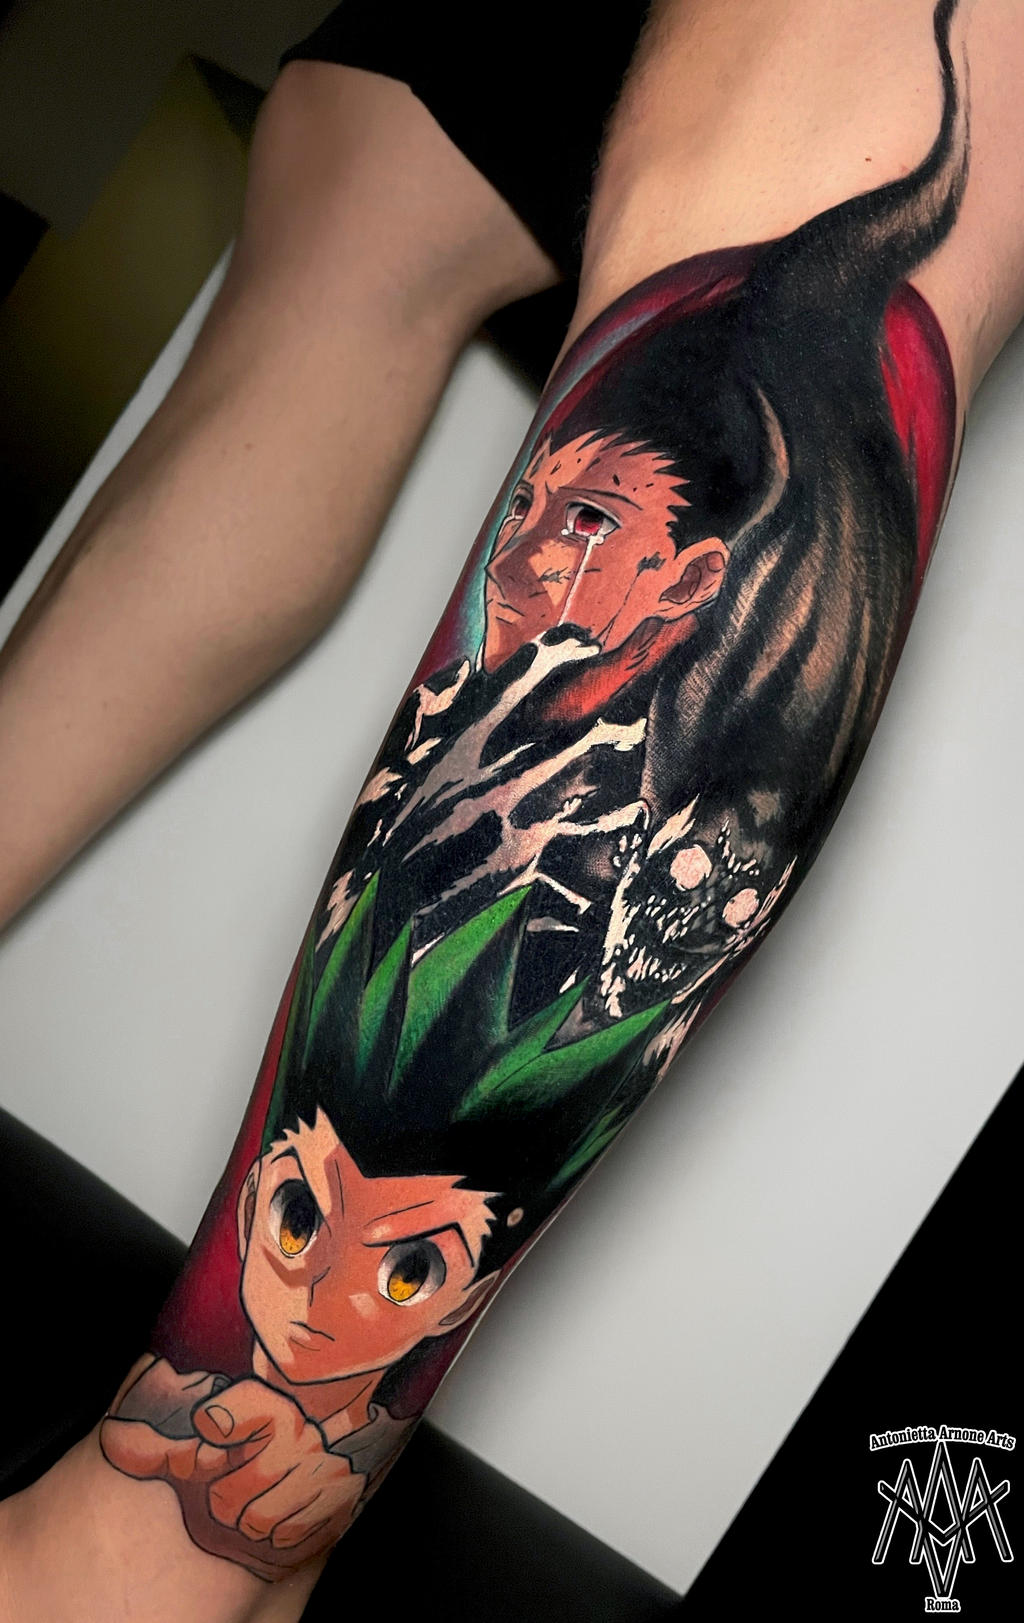 Itachi Uchiha Tattoo by DaveVeroInk by DaveVeroInk on DeviantArt